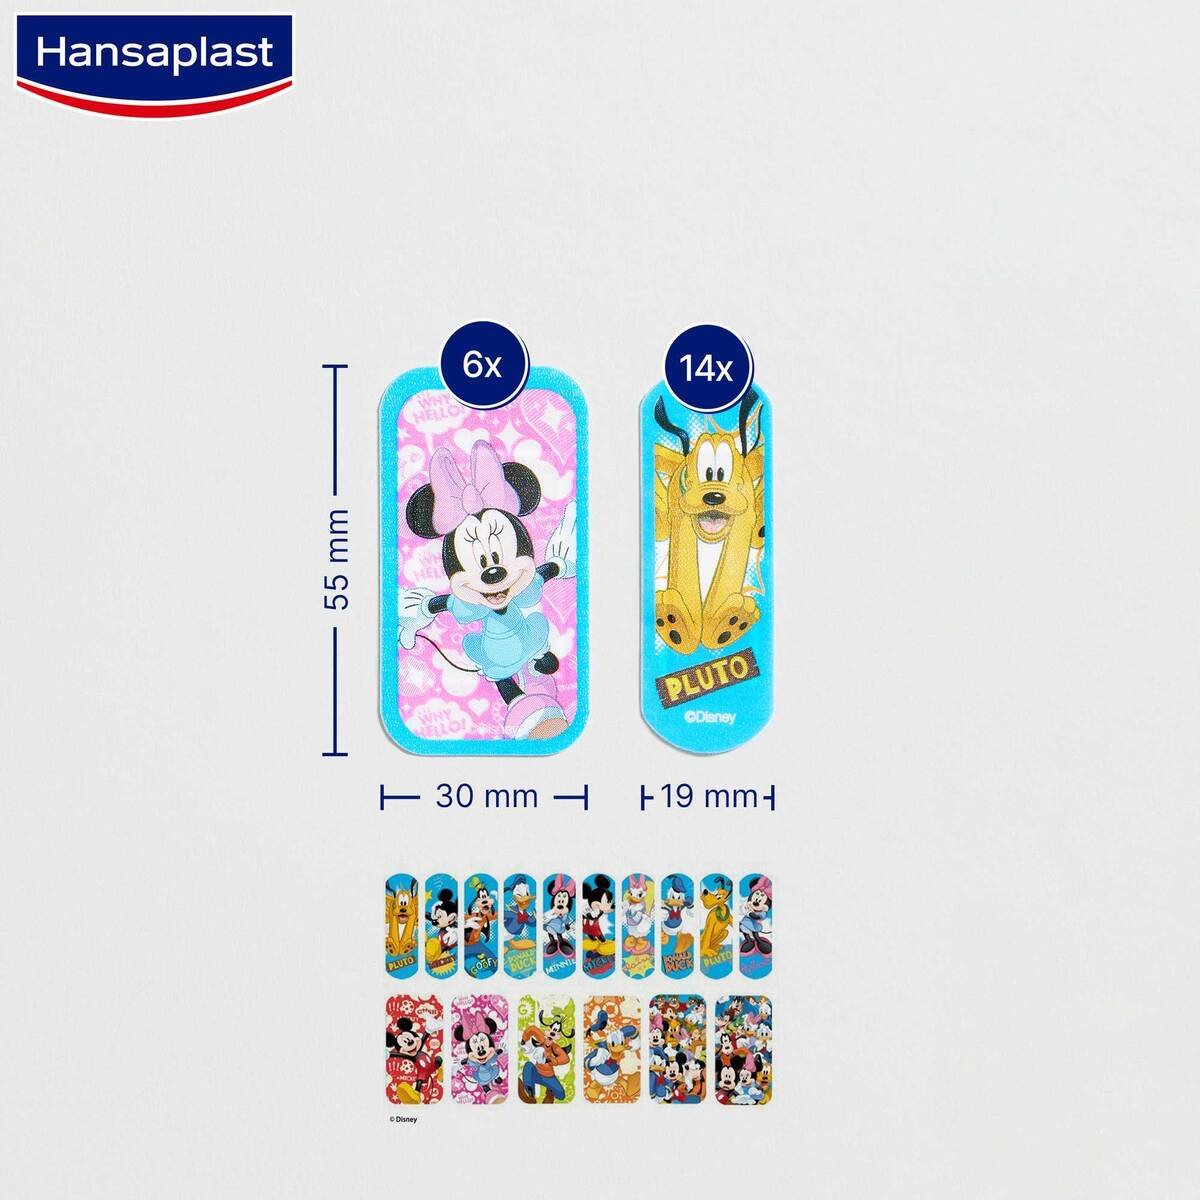 Hansaplast Plasters Disney Mickey Mouse & Friends 20 pcs